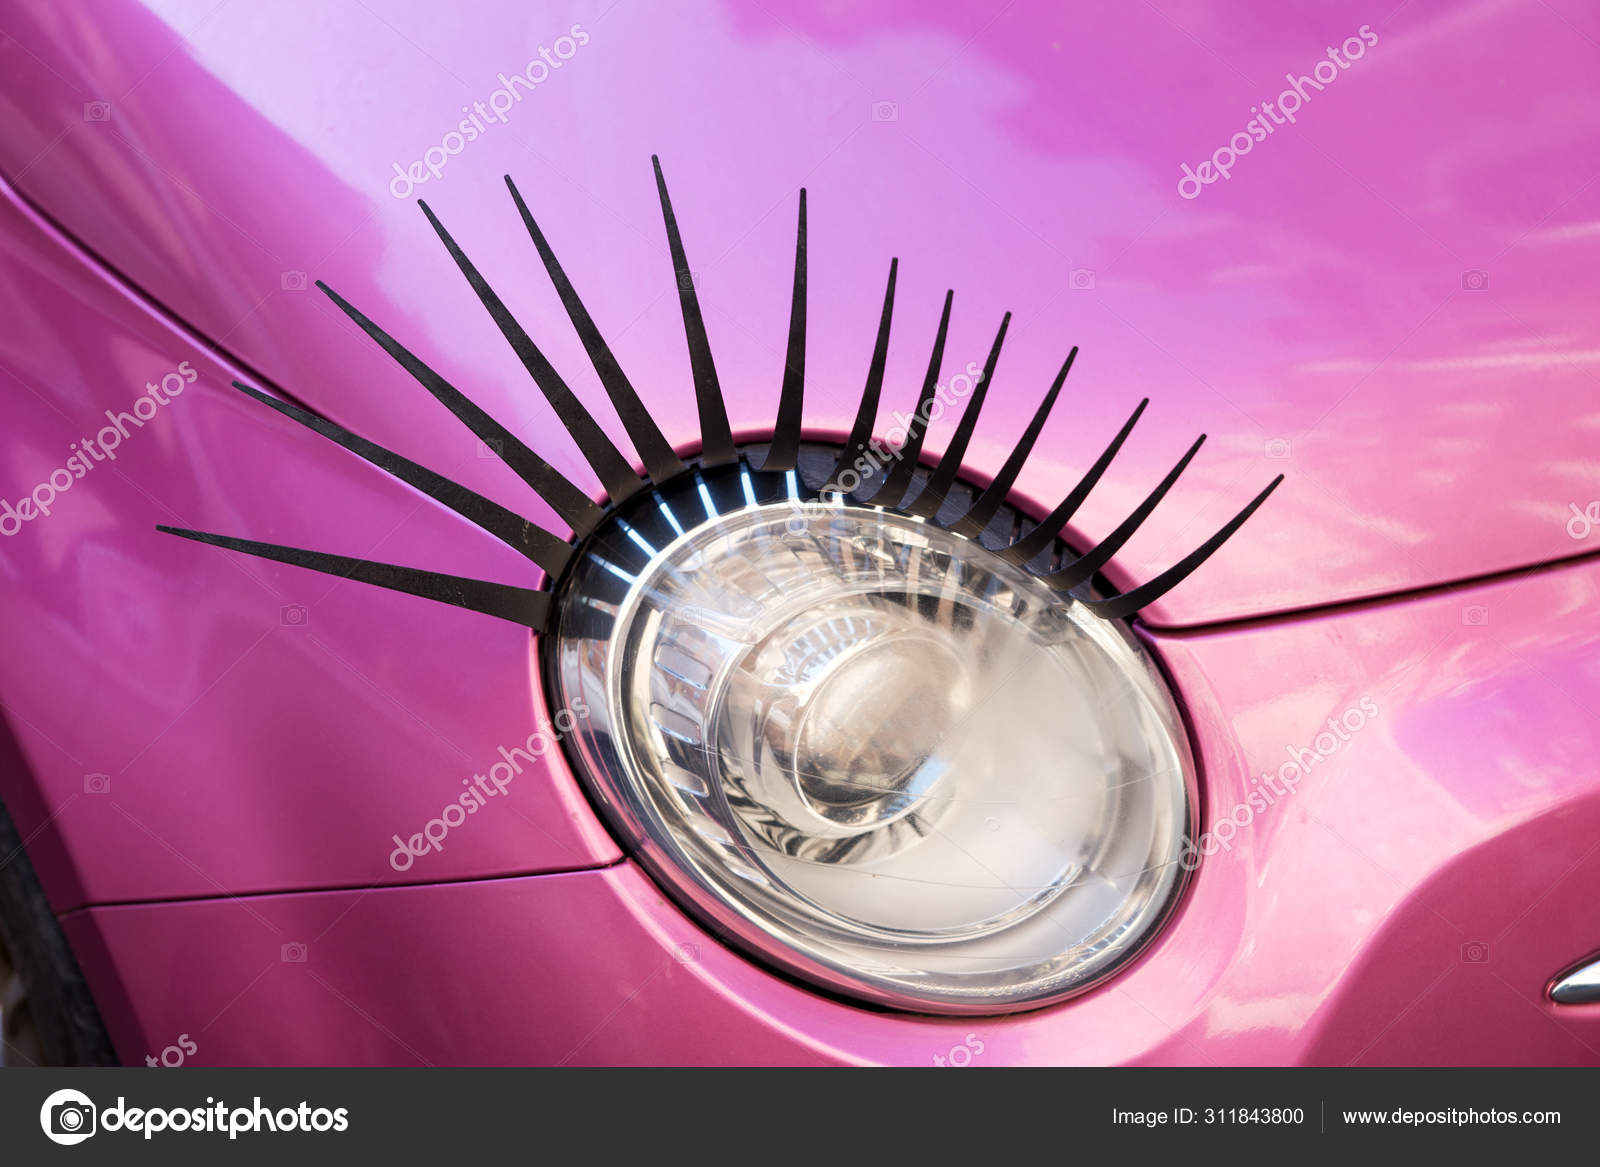 https://st4.depositphotos.com/2946501/31184/i/1600/depositphotos_311843800-stock-photo-pink-car-eyelashes-headlight-closeup.jpg